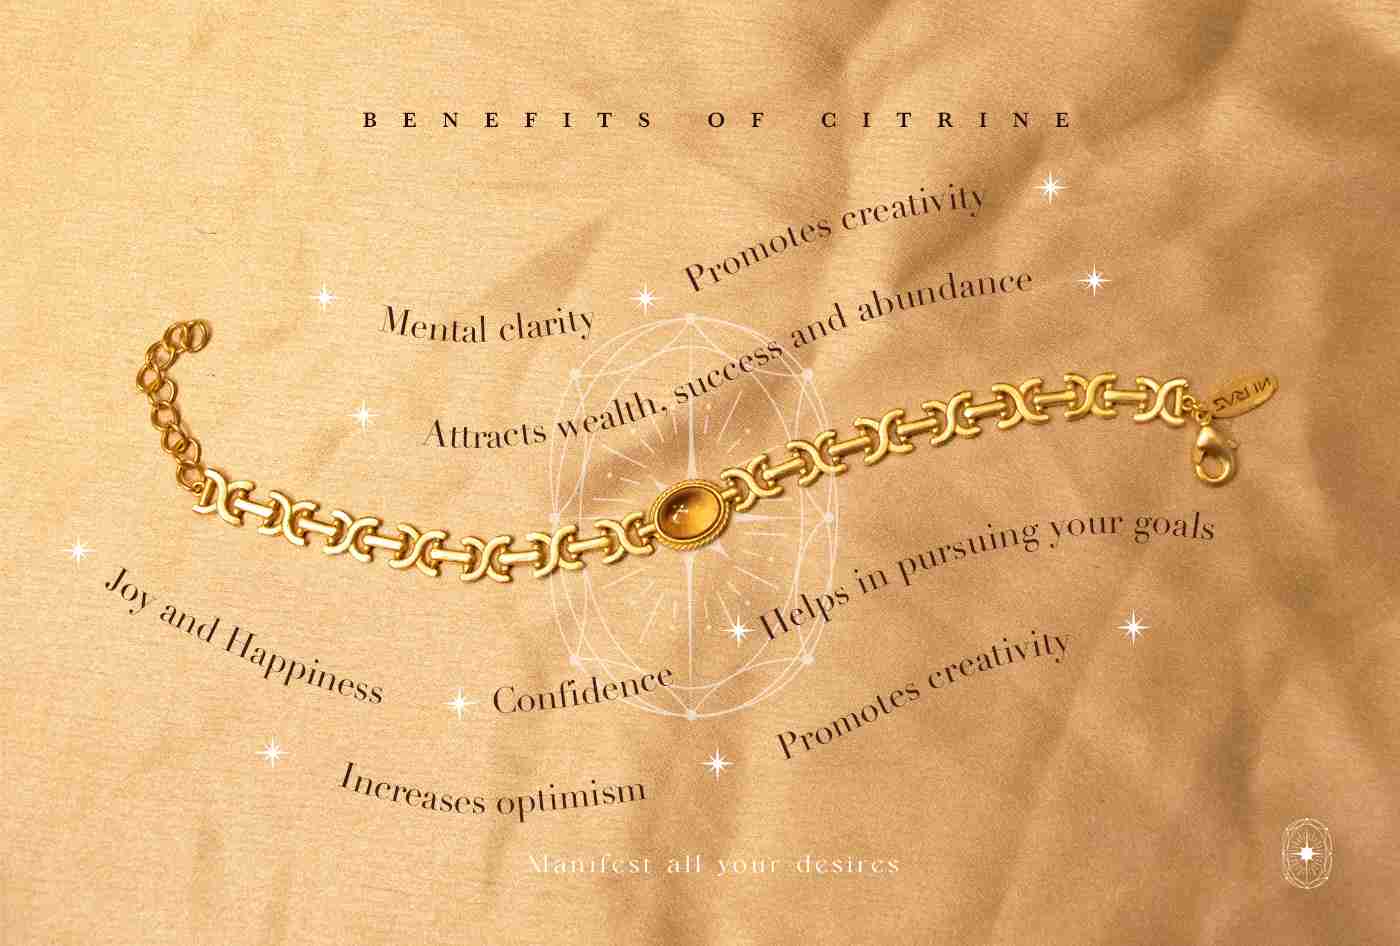 Buy REBUY Citrine Bracelet - Diamond Cut Citrine Stone Bracelet for Men &  Women | 8mm Beads| Yellow Gemstone Jewelry with Lab Certificate at Amazon.in